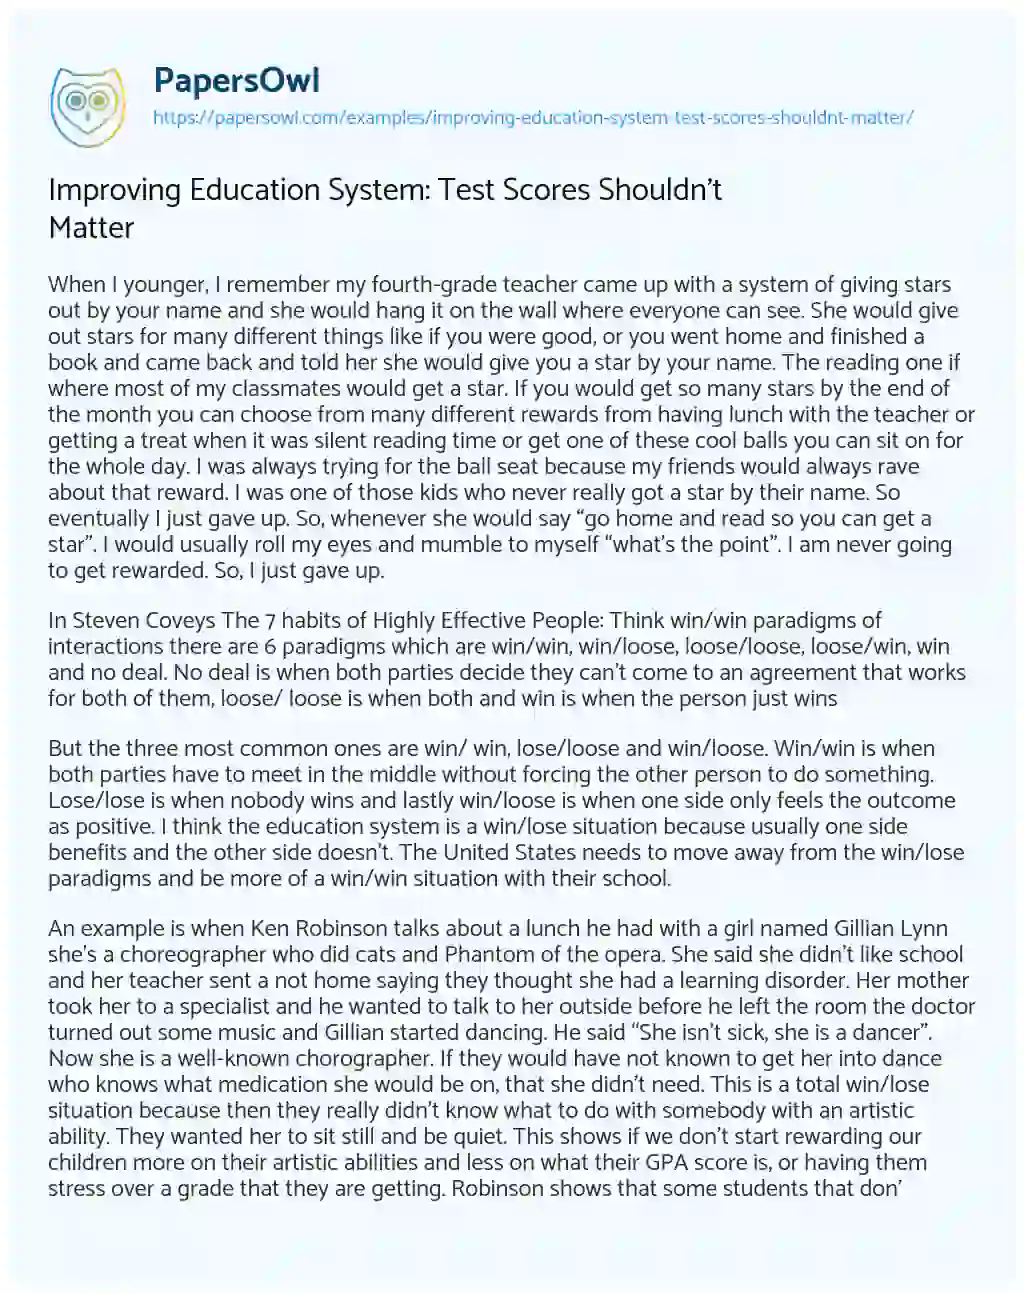 Essay on Improving Education System: Test Scores shouldn’t Matter